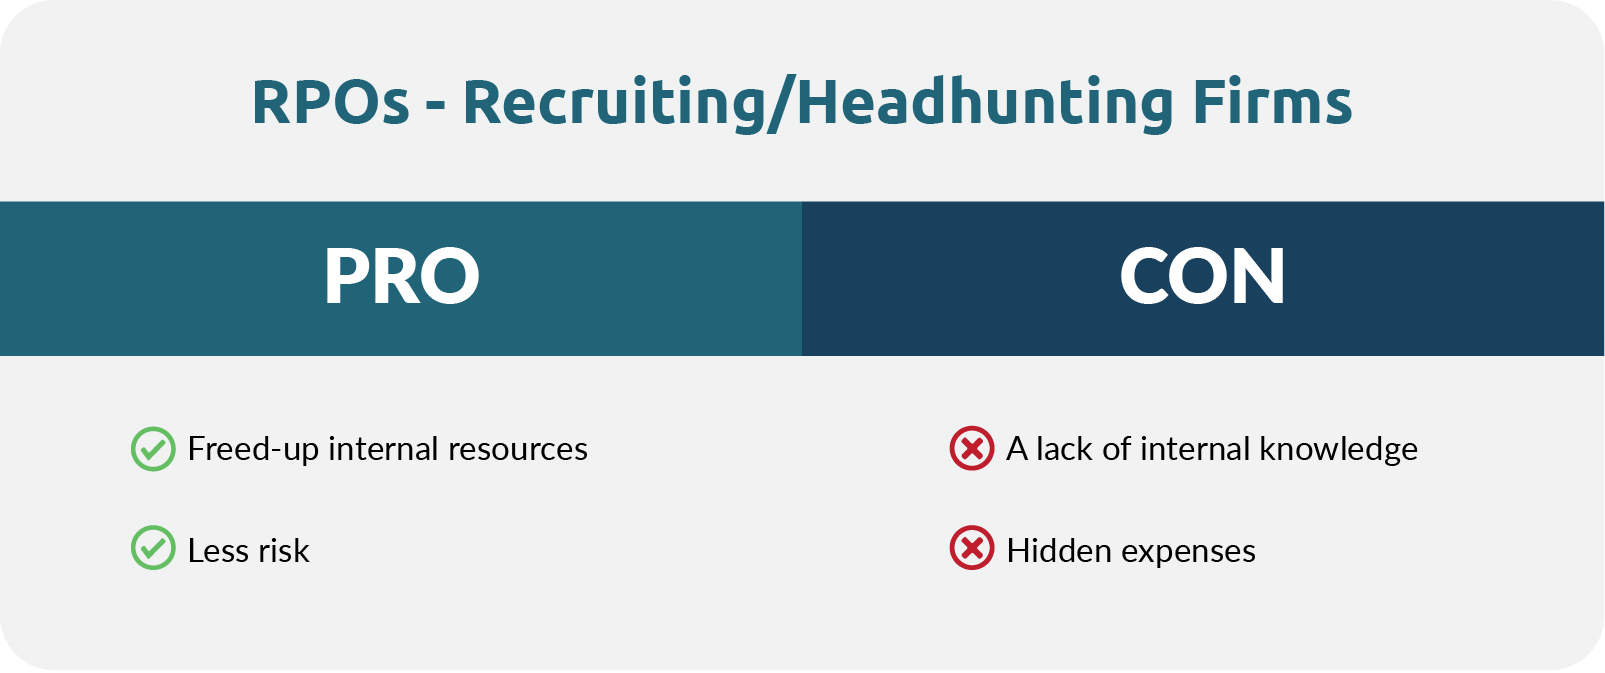 ProCon_RPOs - Recruiting-Headhunting Firms